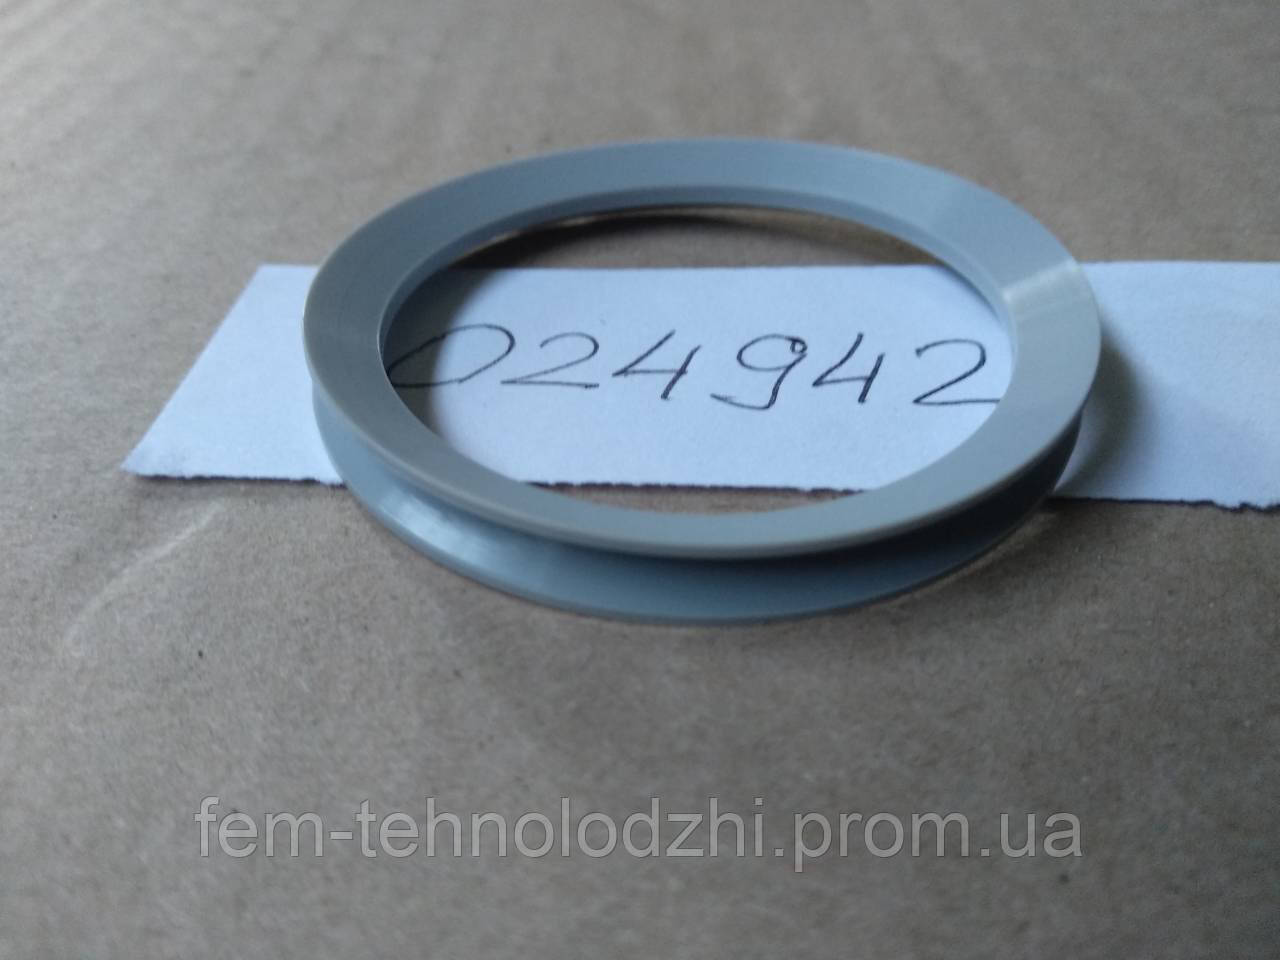 024942 резиновое кольцо MERLO